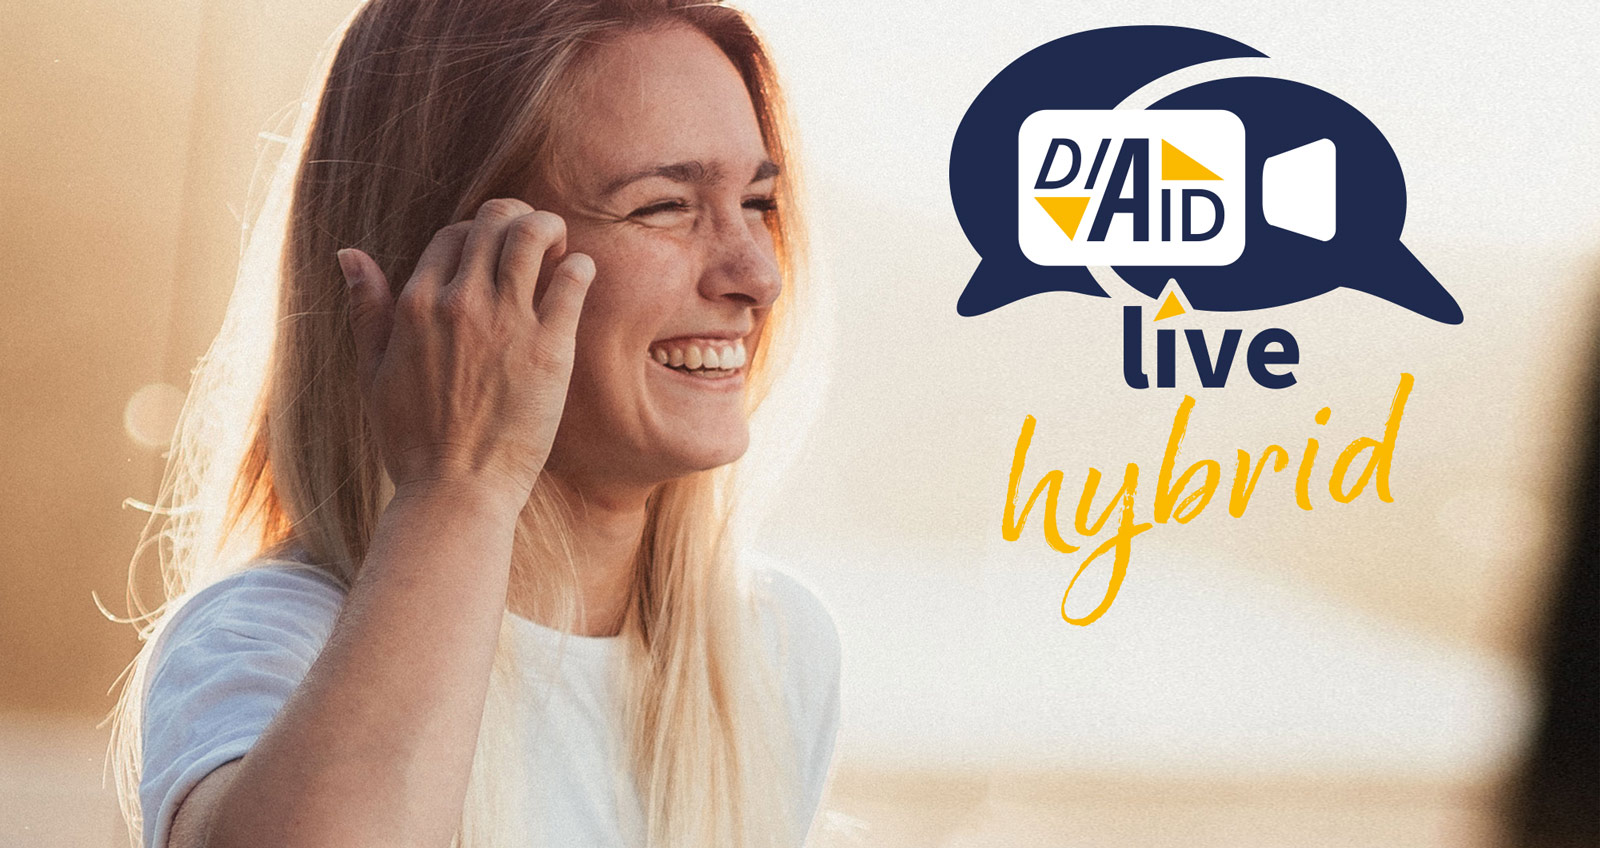 Michelle Schmidt, daneben das DIA-AID-live-Hybrid-Logo